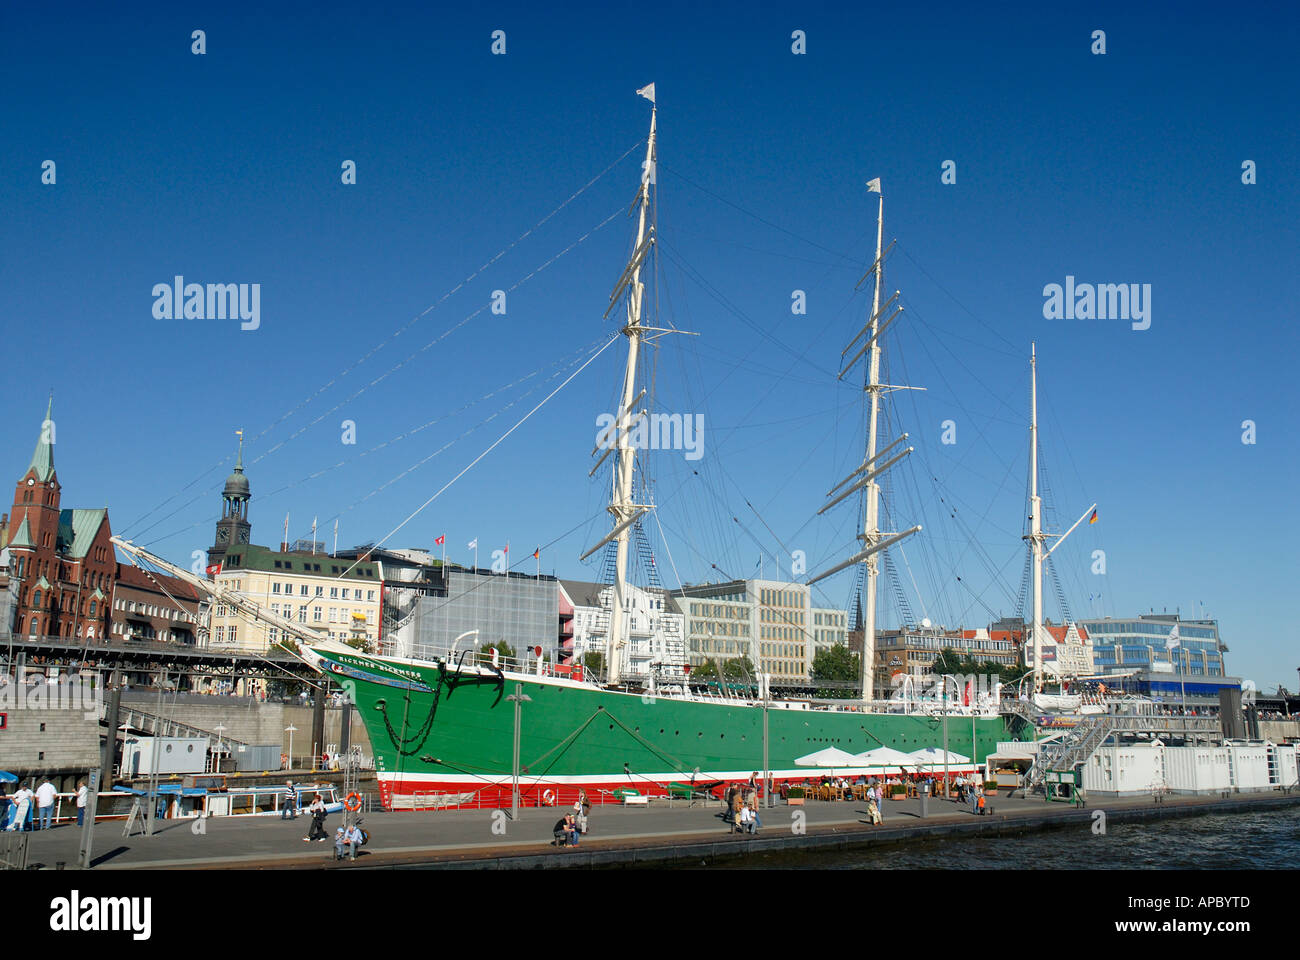 Storica nave a vela Rickmer Rickmers giacente in corrispondenza Landungsbrücken al porto di Amburgo, Amburgo, Germania Foto Stock